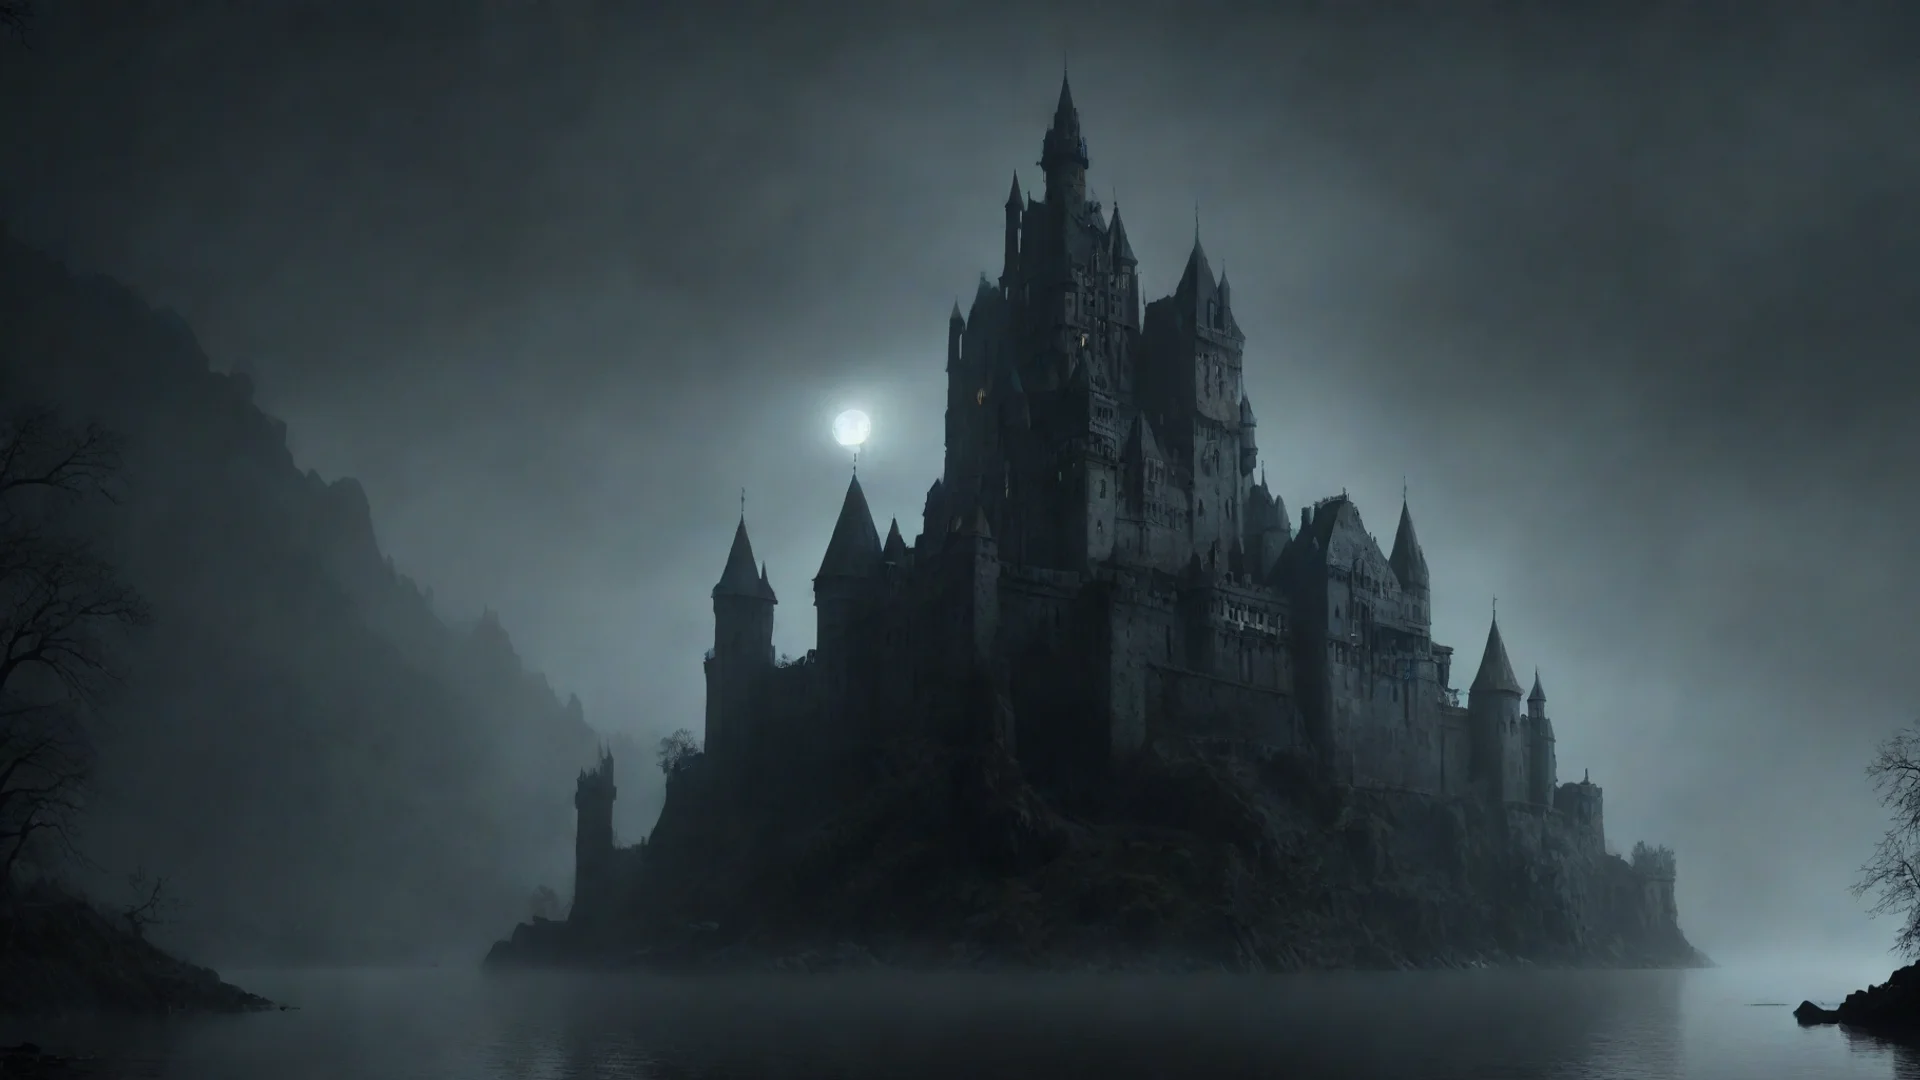 gormenghast castle mutant city on far shore of lake misty night atmosphere dark noir detailed photography wide